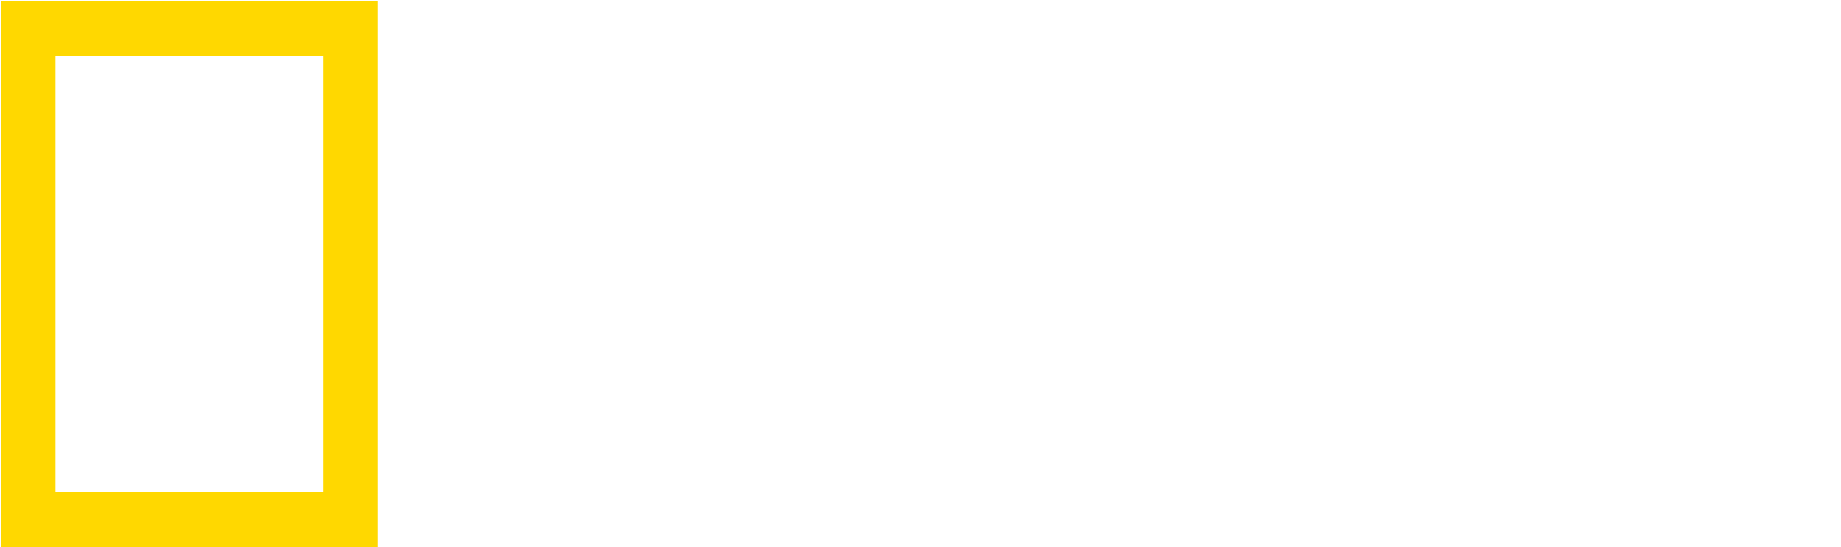 Ng Logo White - National Geographic Logo Hd (2000x677), Png Download